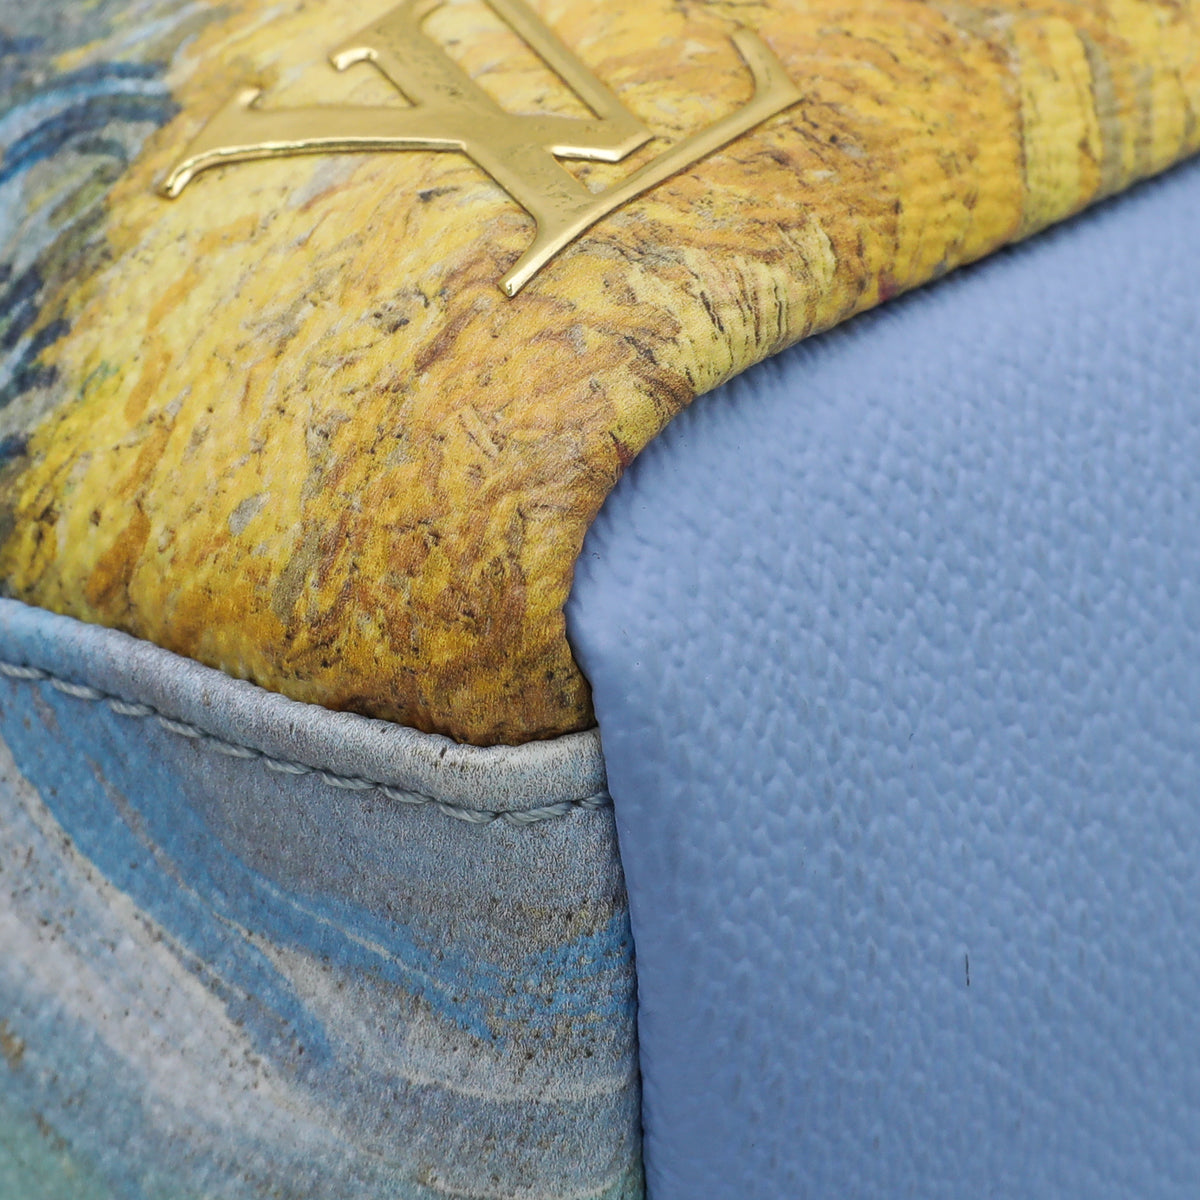 Louis Vuitton Multicolor Canvas Van Gogh Zippy Wallet Louis Vuitton